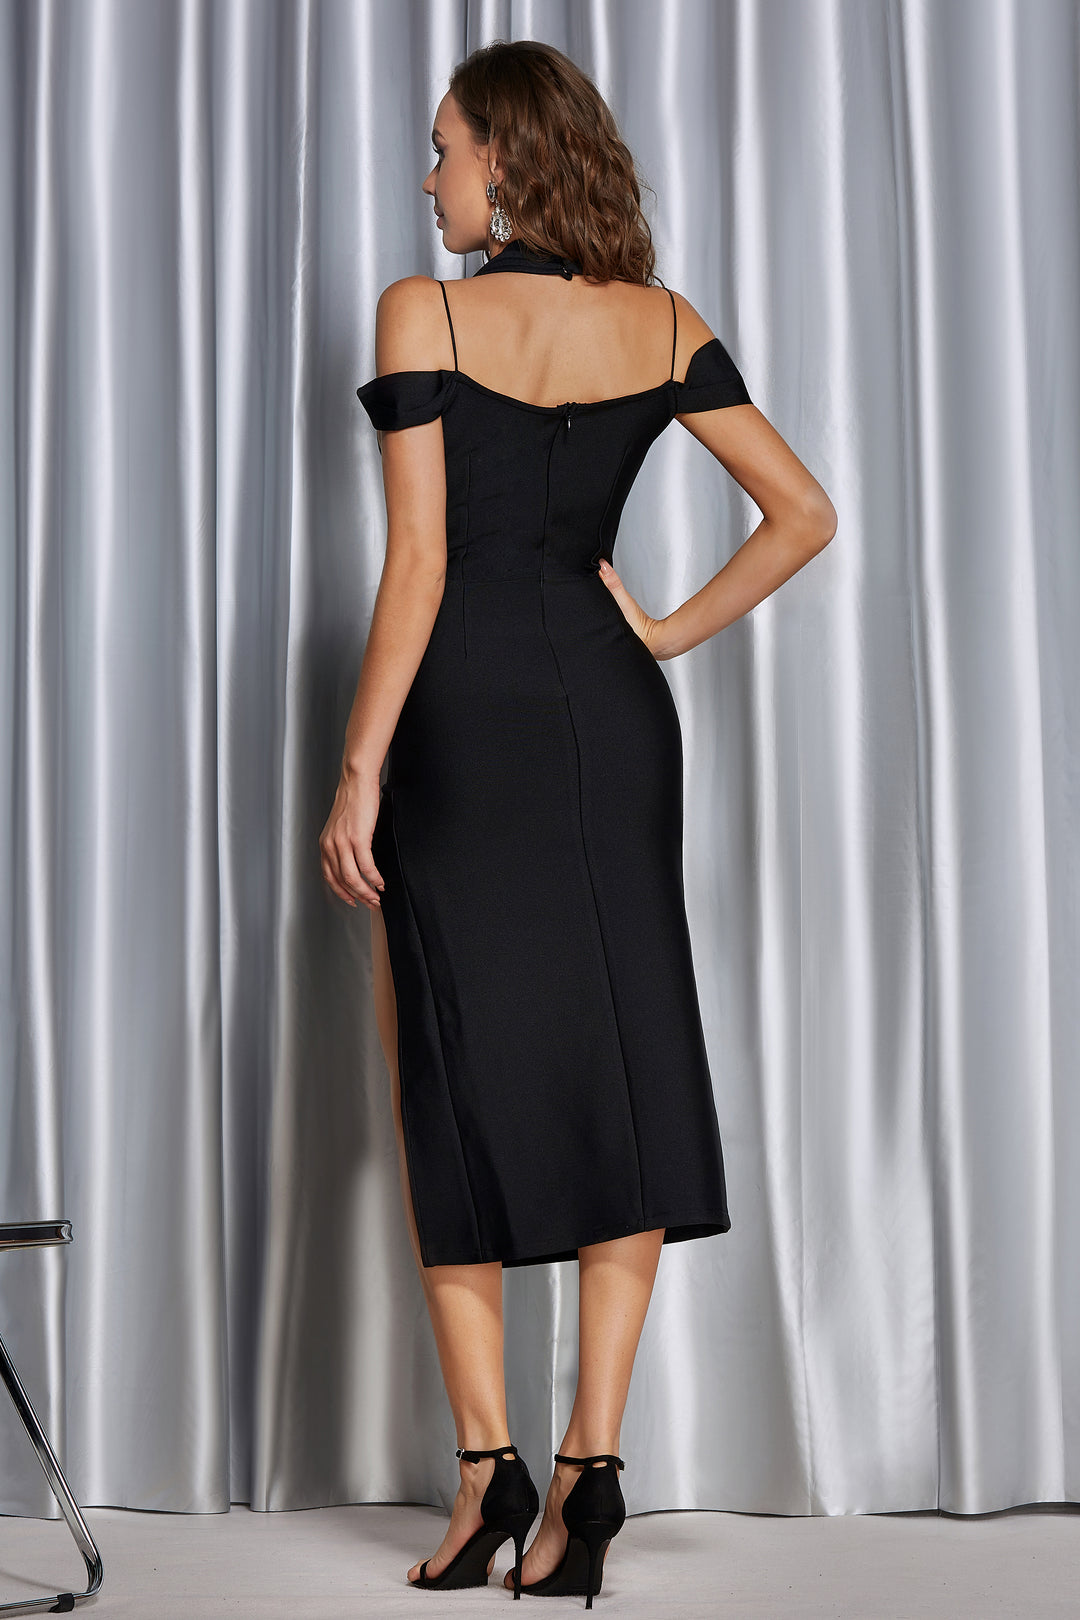 Sesidy-Marigold Elegance Black Dress-Women's Clothing Online Store